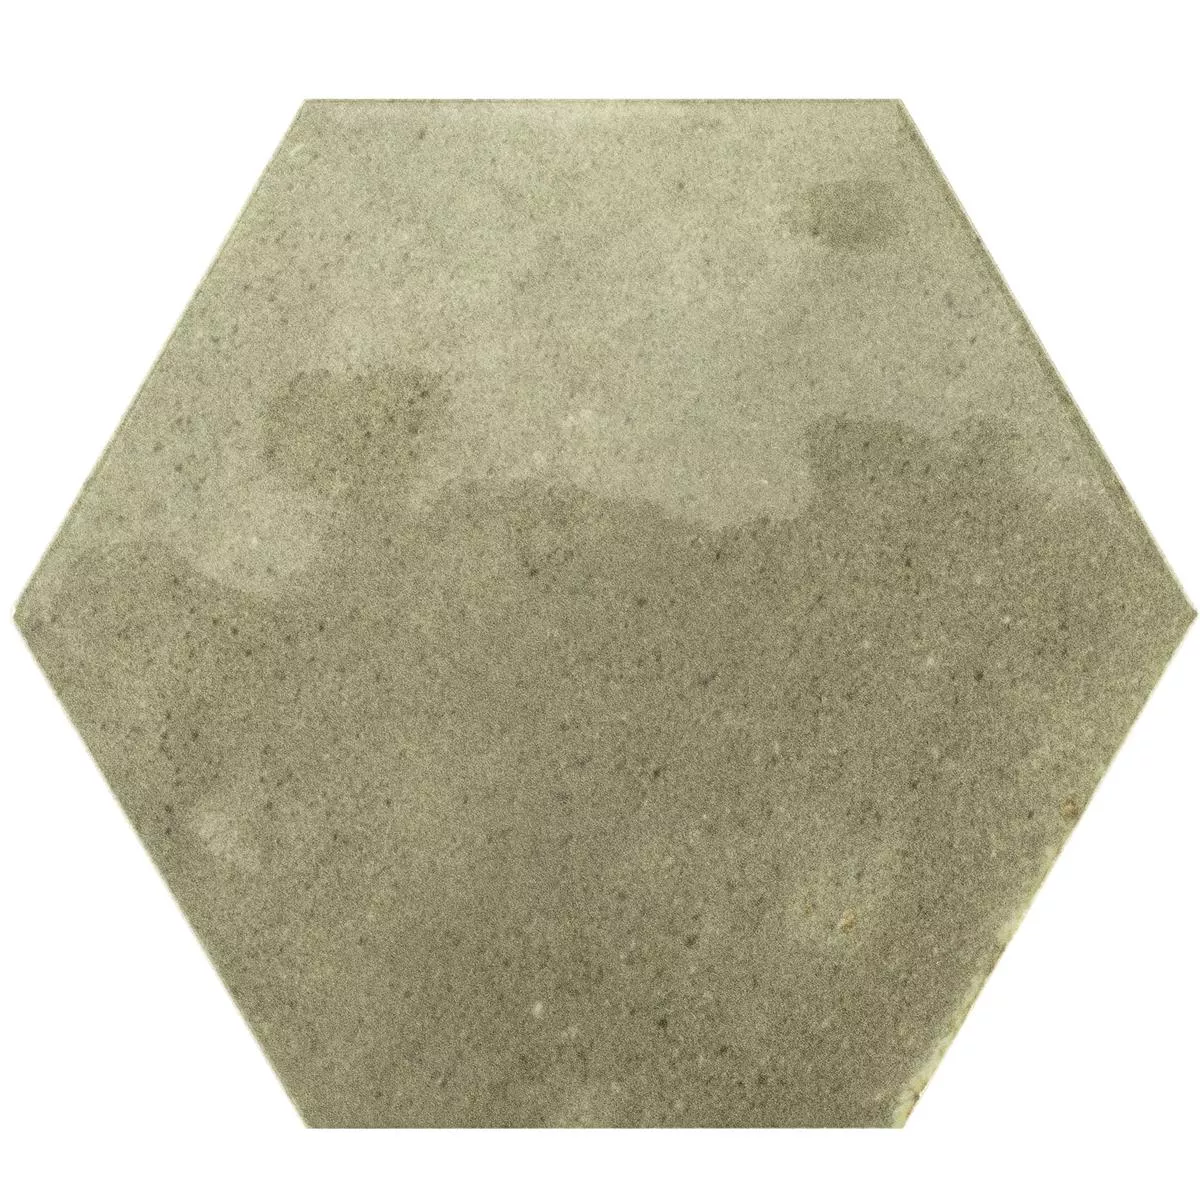 Sample Wall Tiles Arosa Glossy Waved Hexagon Olive Green 17,3x15cm